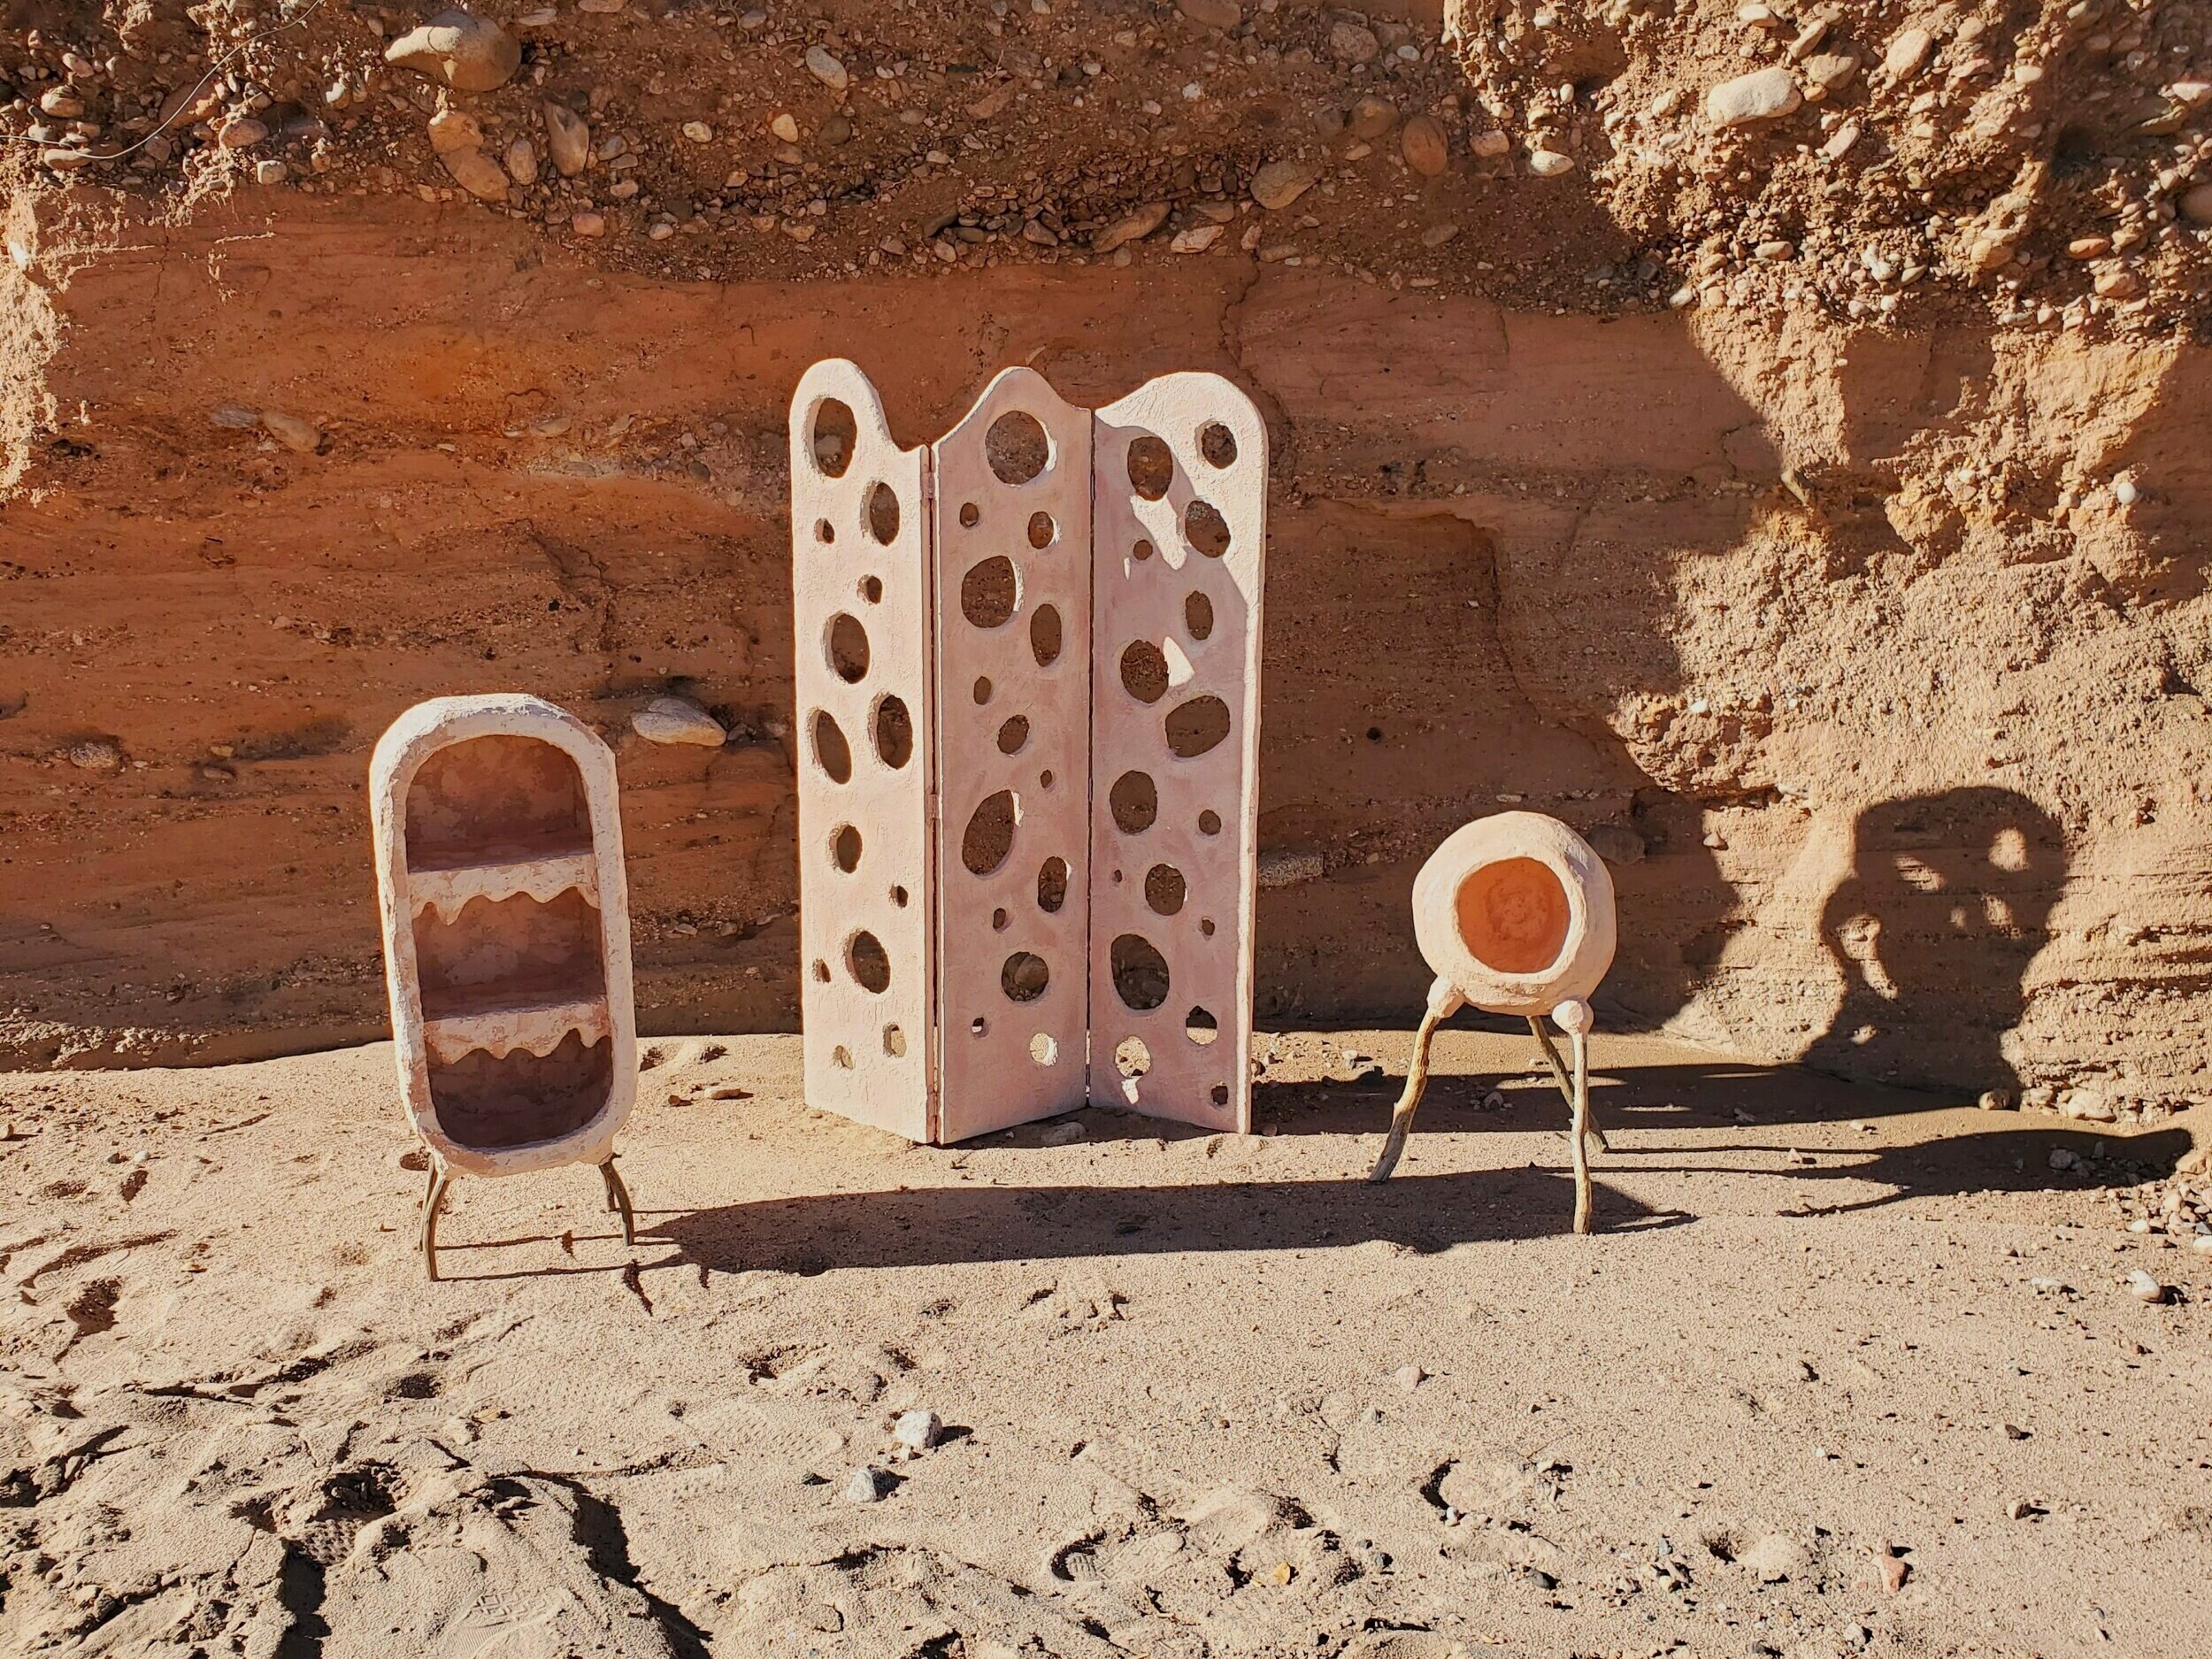 Desert Furniture Series, 2019